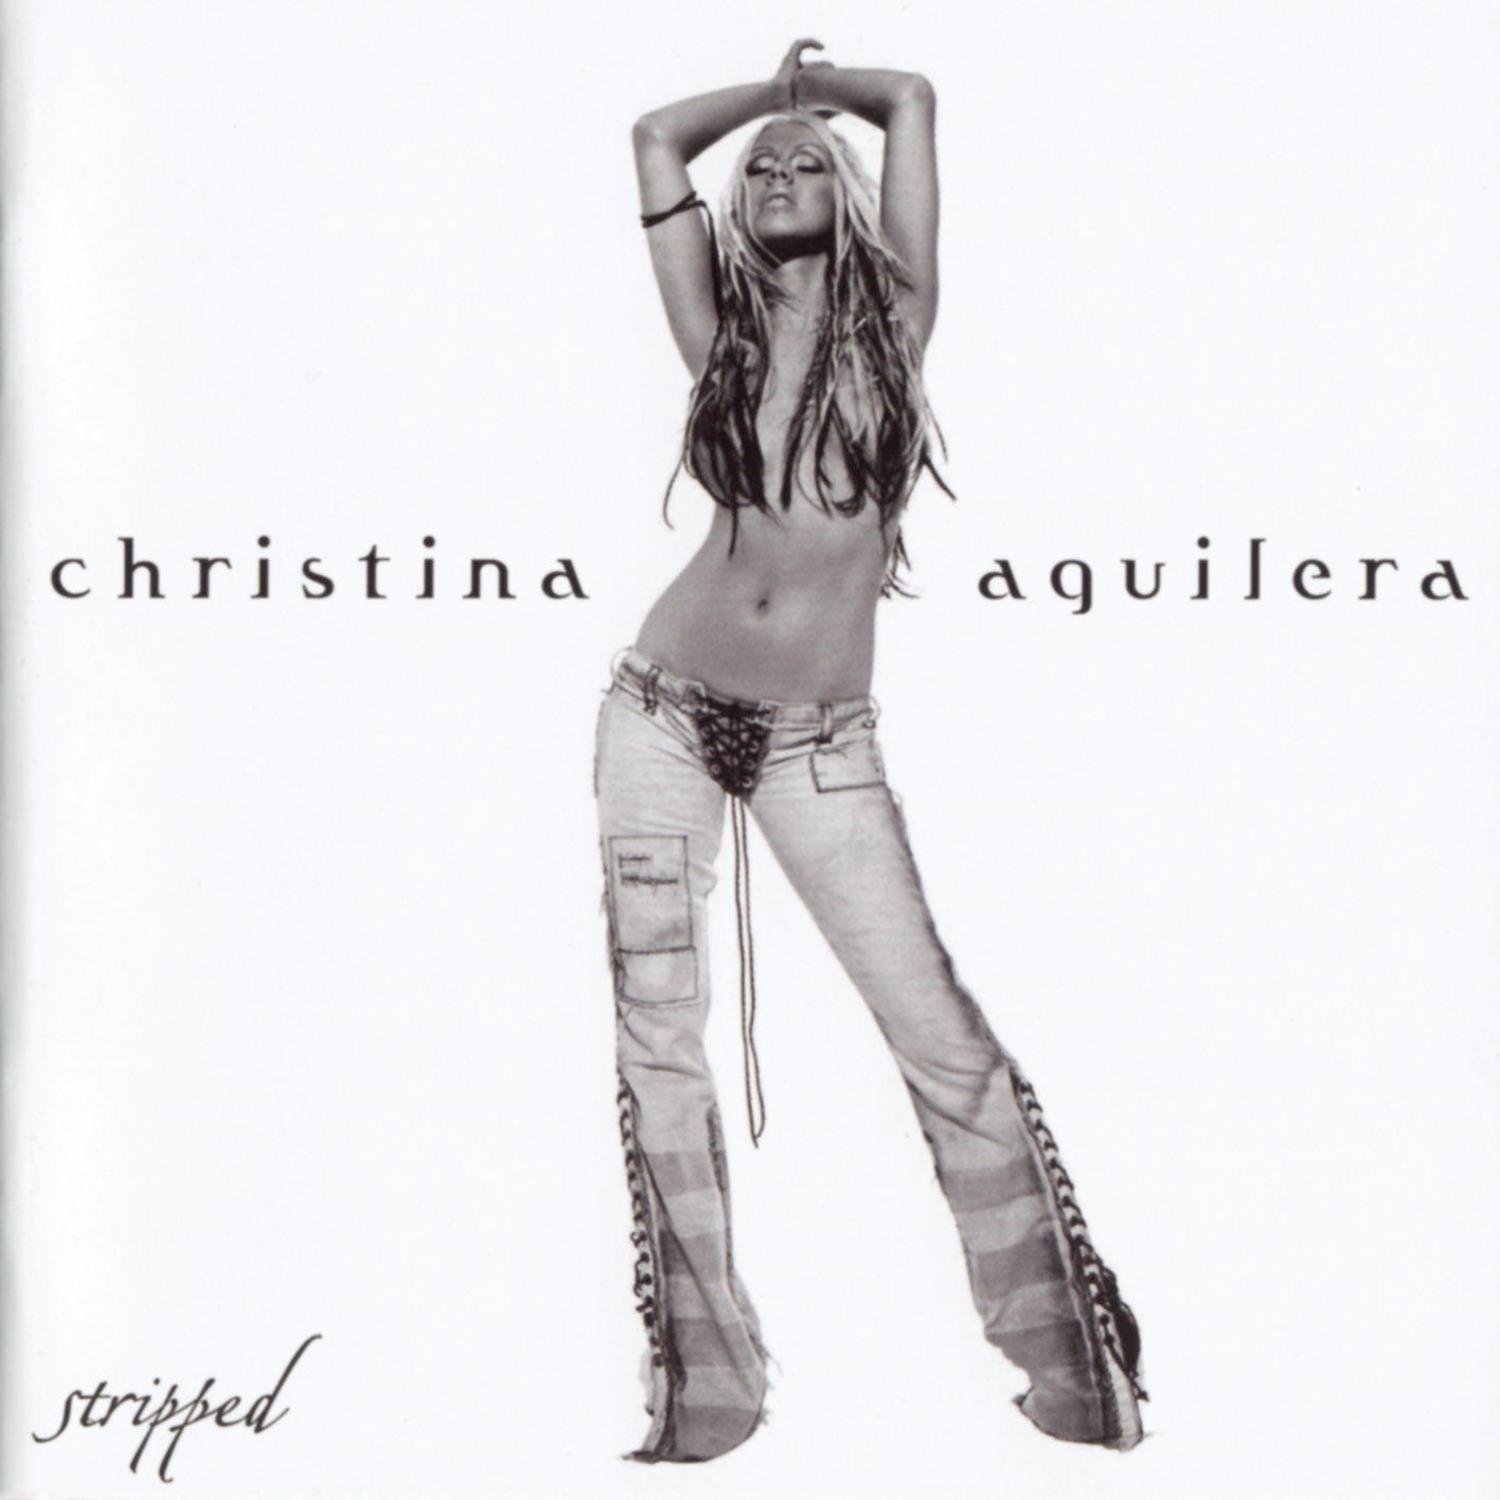 Albumcover von "Stripped", Christina Aguilera